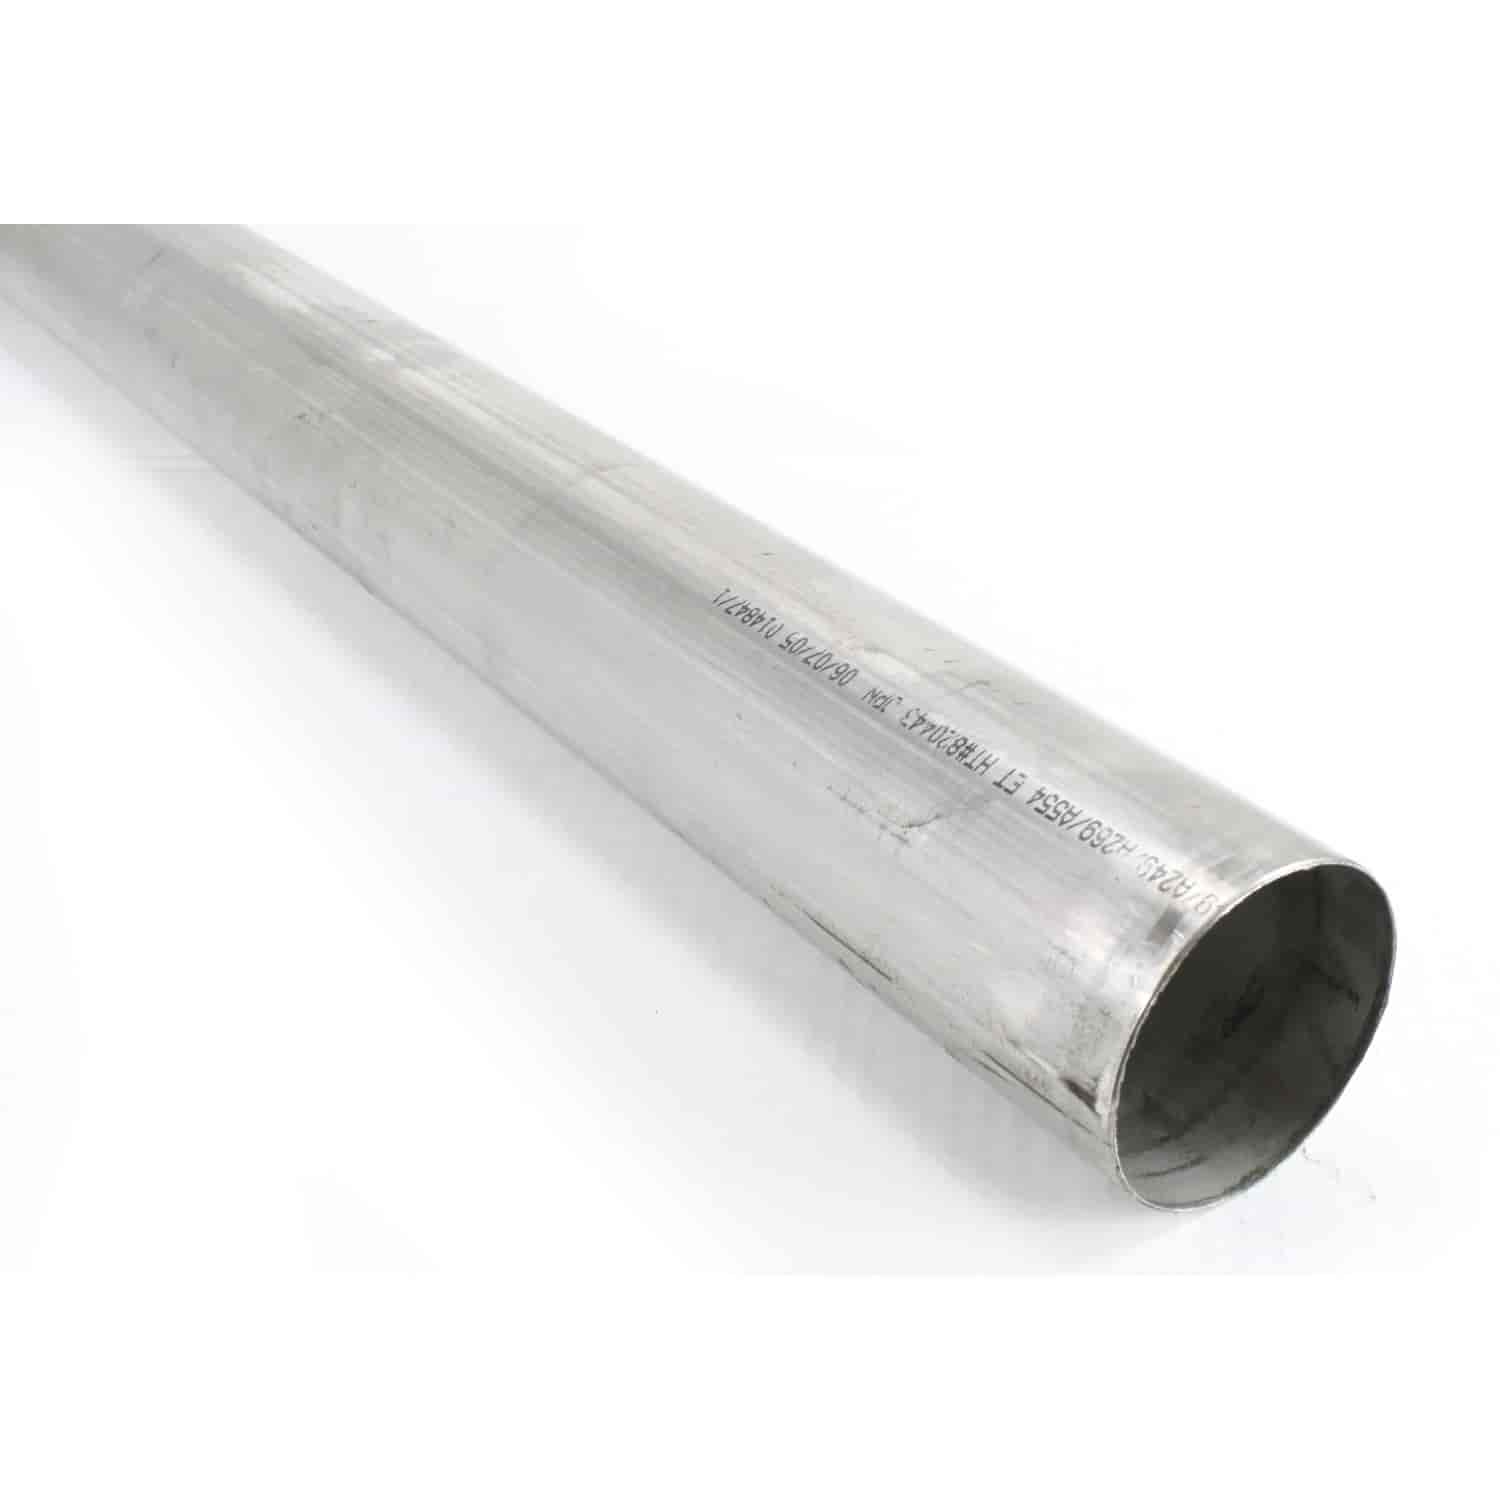 Stainless Steel Exhaust Tubing 16 Gauge